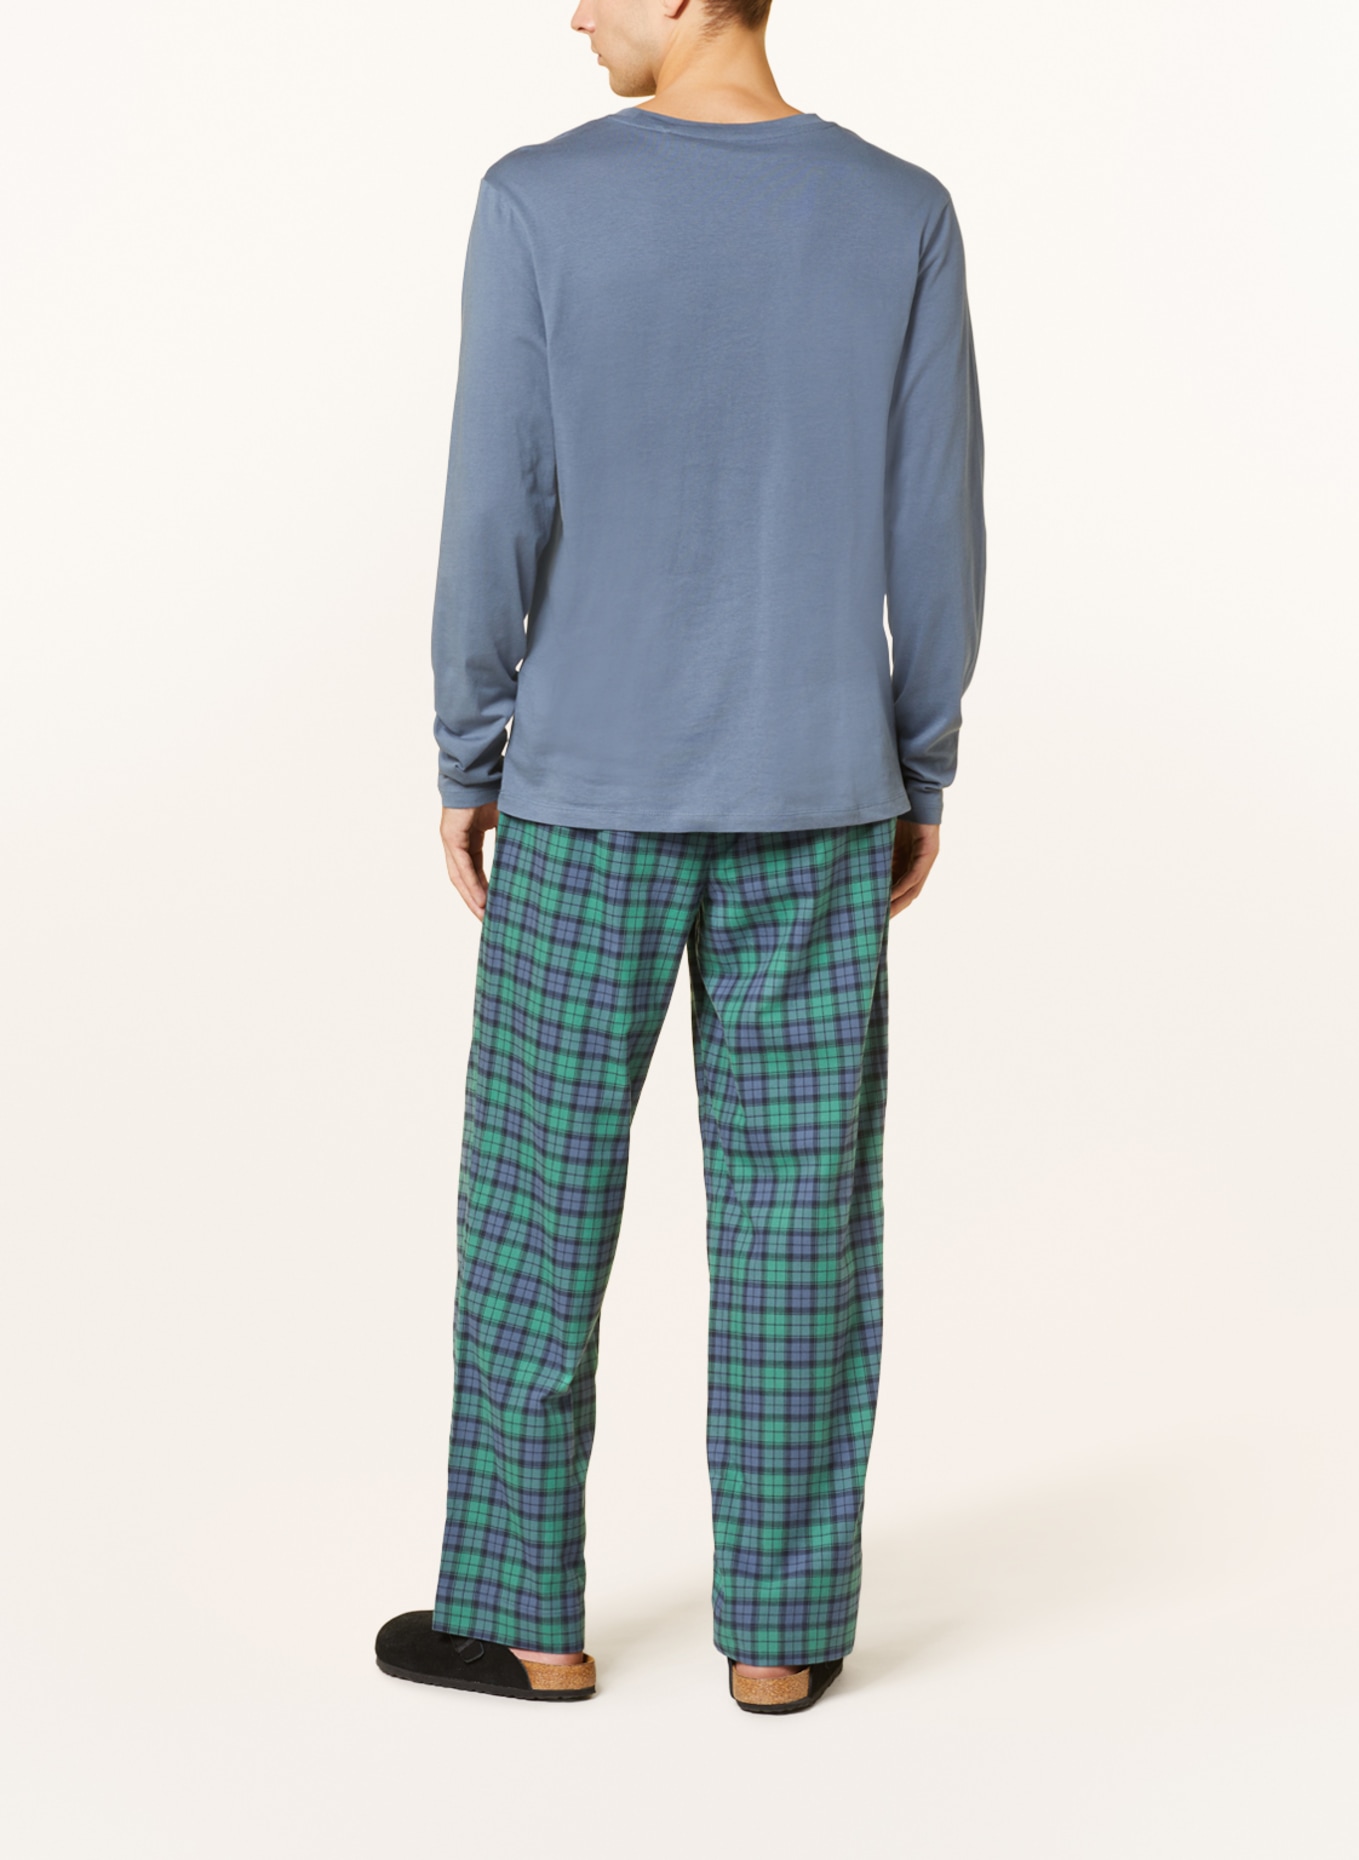 Marc O'Polo Pajama pants in green/ blue gray/ dark blue